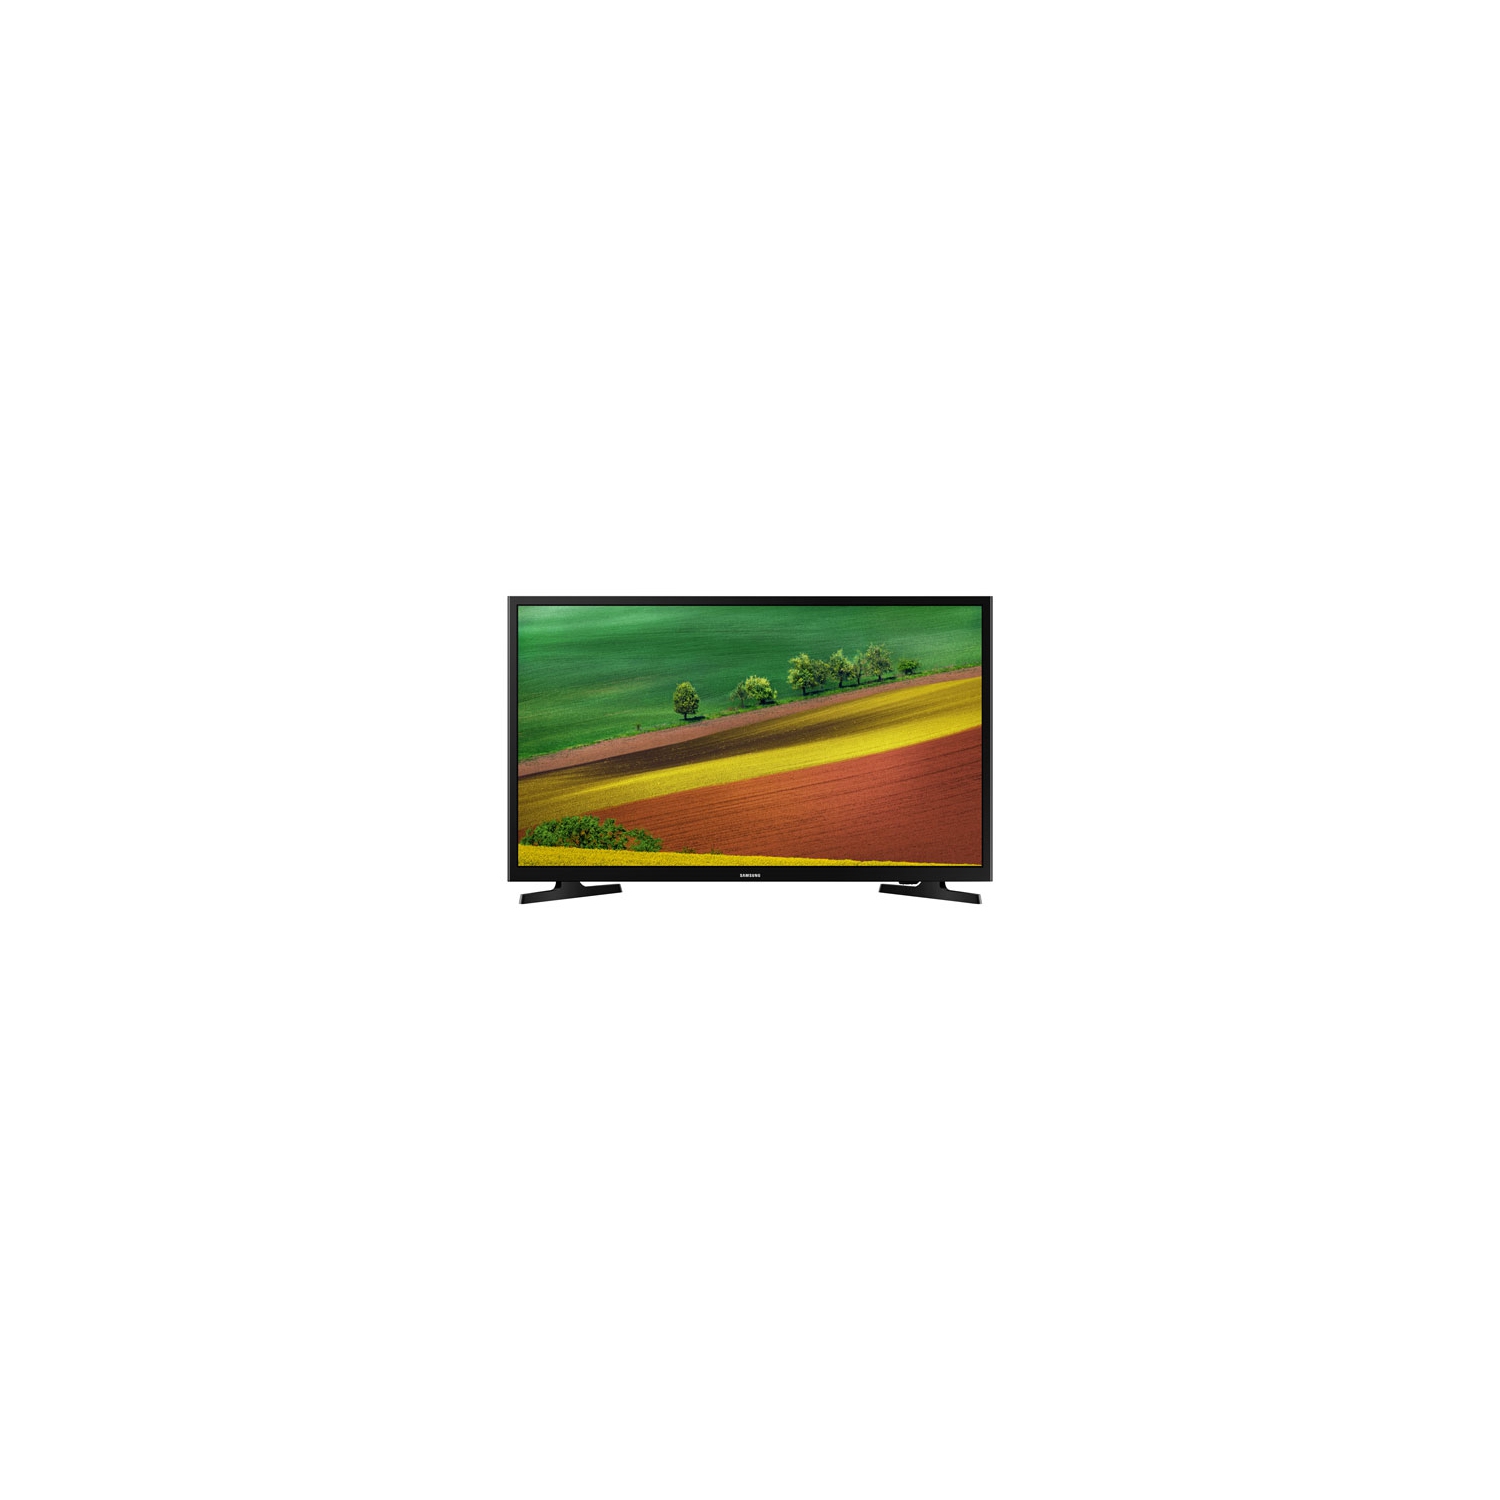 Open Box - Samsung 32" 720p HD LED Tizen Smart TV (UN32M4500BFXZC) - Glossy Black